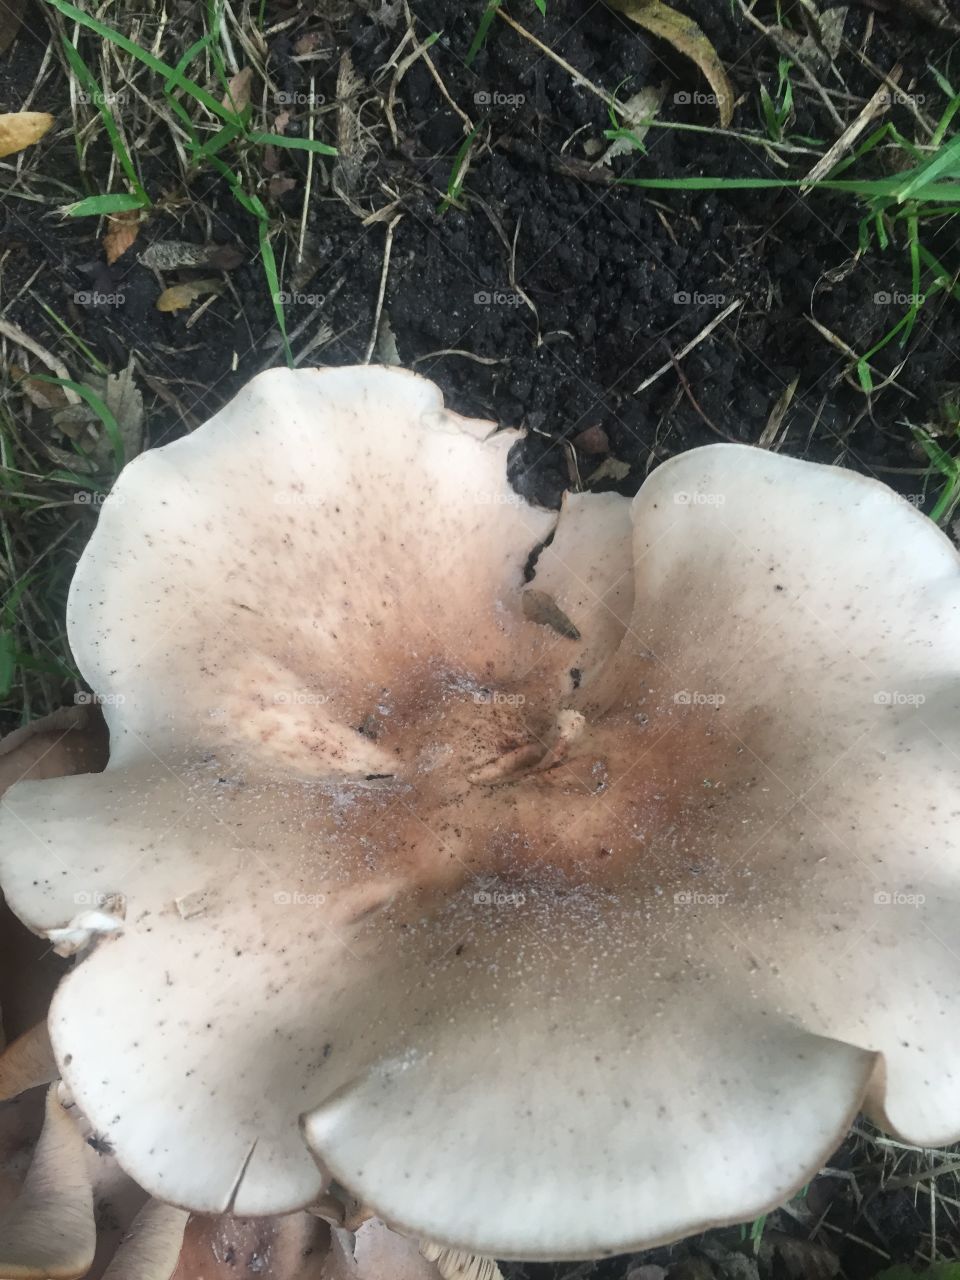 Wild mushrooms in the soil